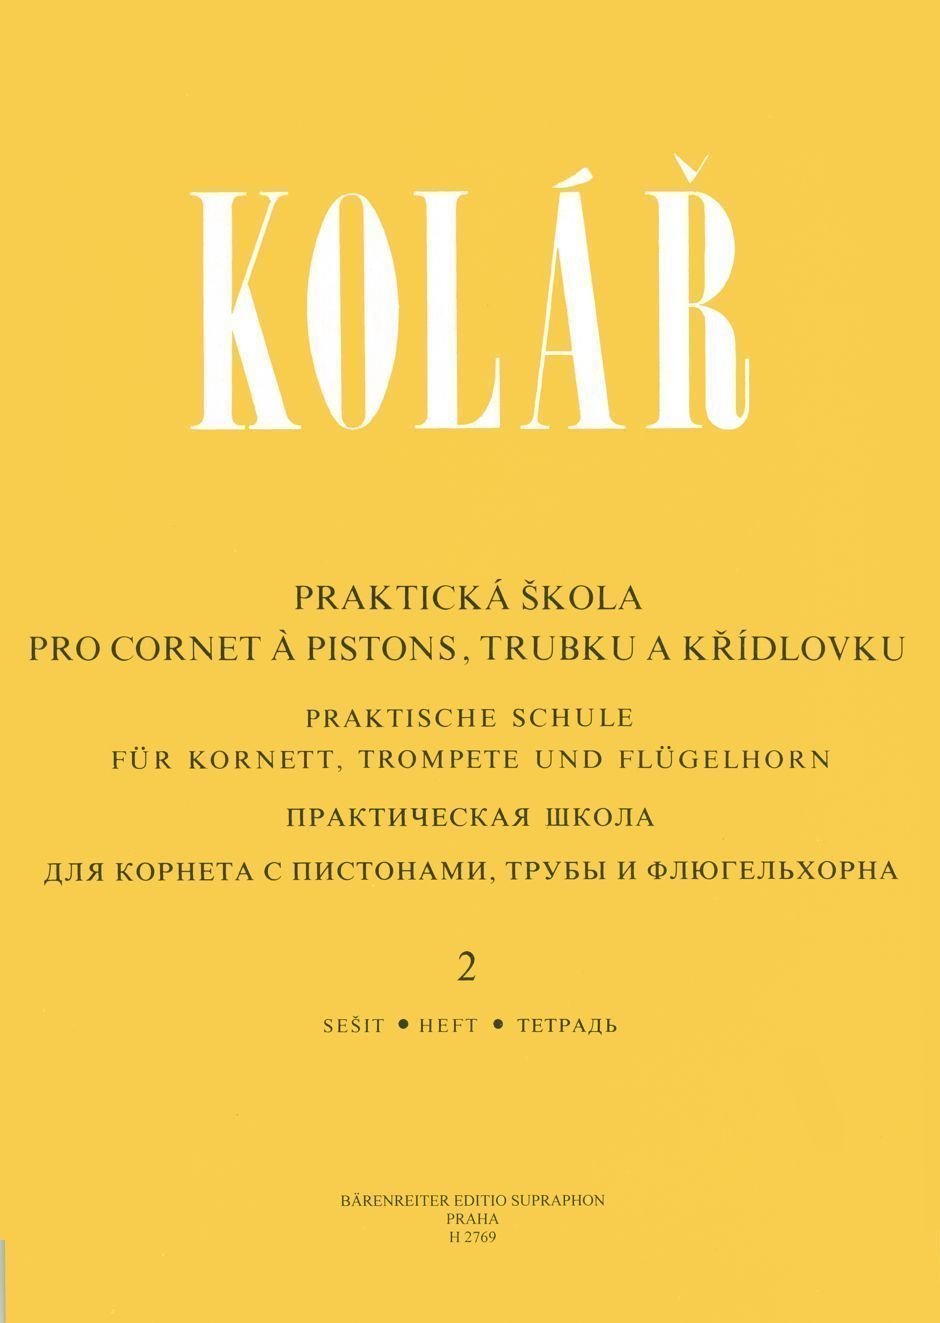 Partitura para instrumentos de viento Jaroslav Kolář Praktická škola pro cornet á pistons, trubku a křídlovku 2 Music Book Partitura para instrumentos de viento